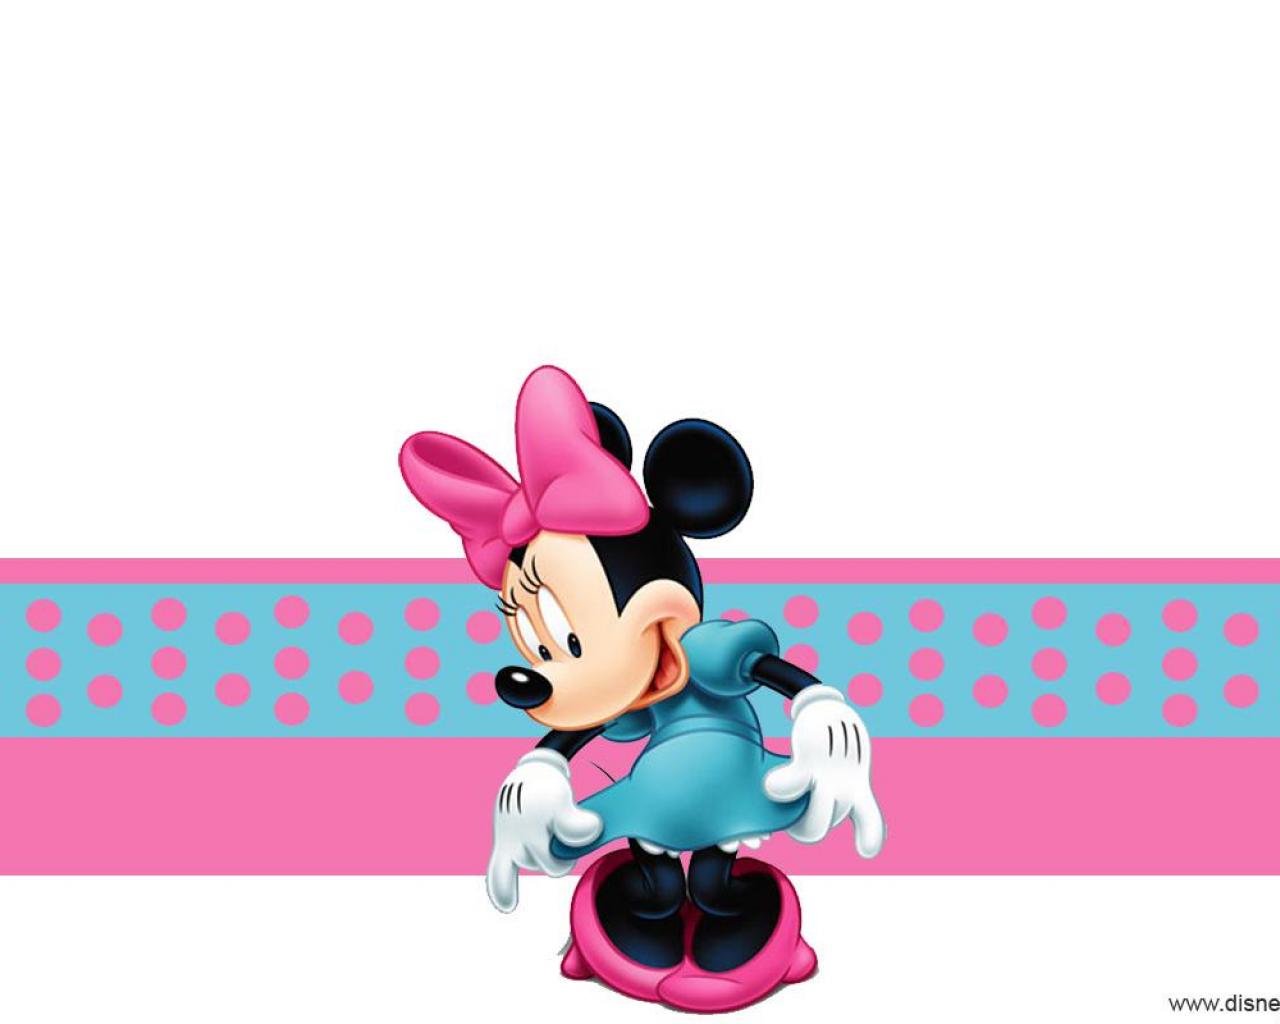 Wallpaper Minnie Mouse Atpeek Search Engine 1280x1024PX Minnie